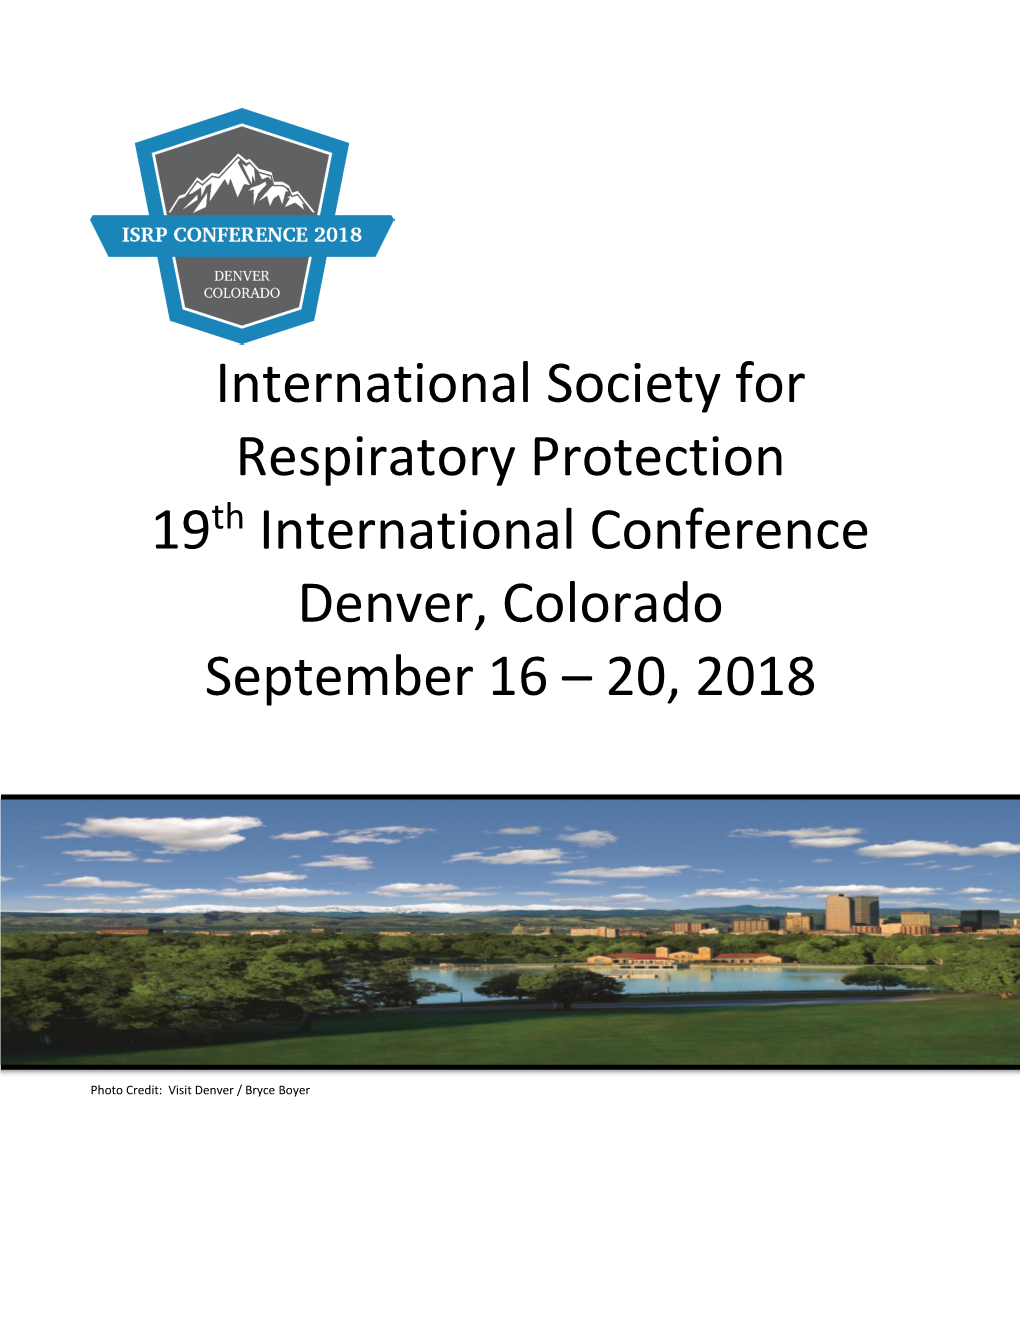 International Society for Respiratory Protection 19Th International Conference Denver, Colorado September 16 – 20, 2018